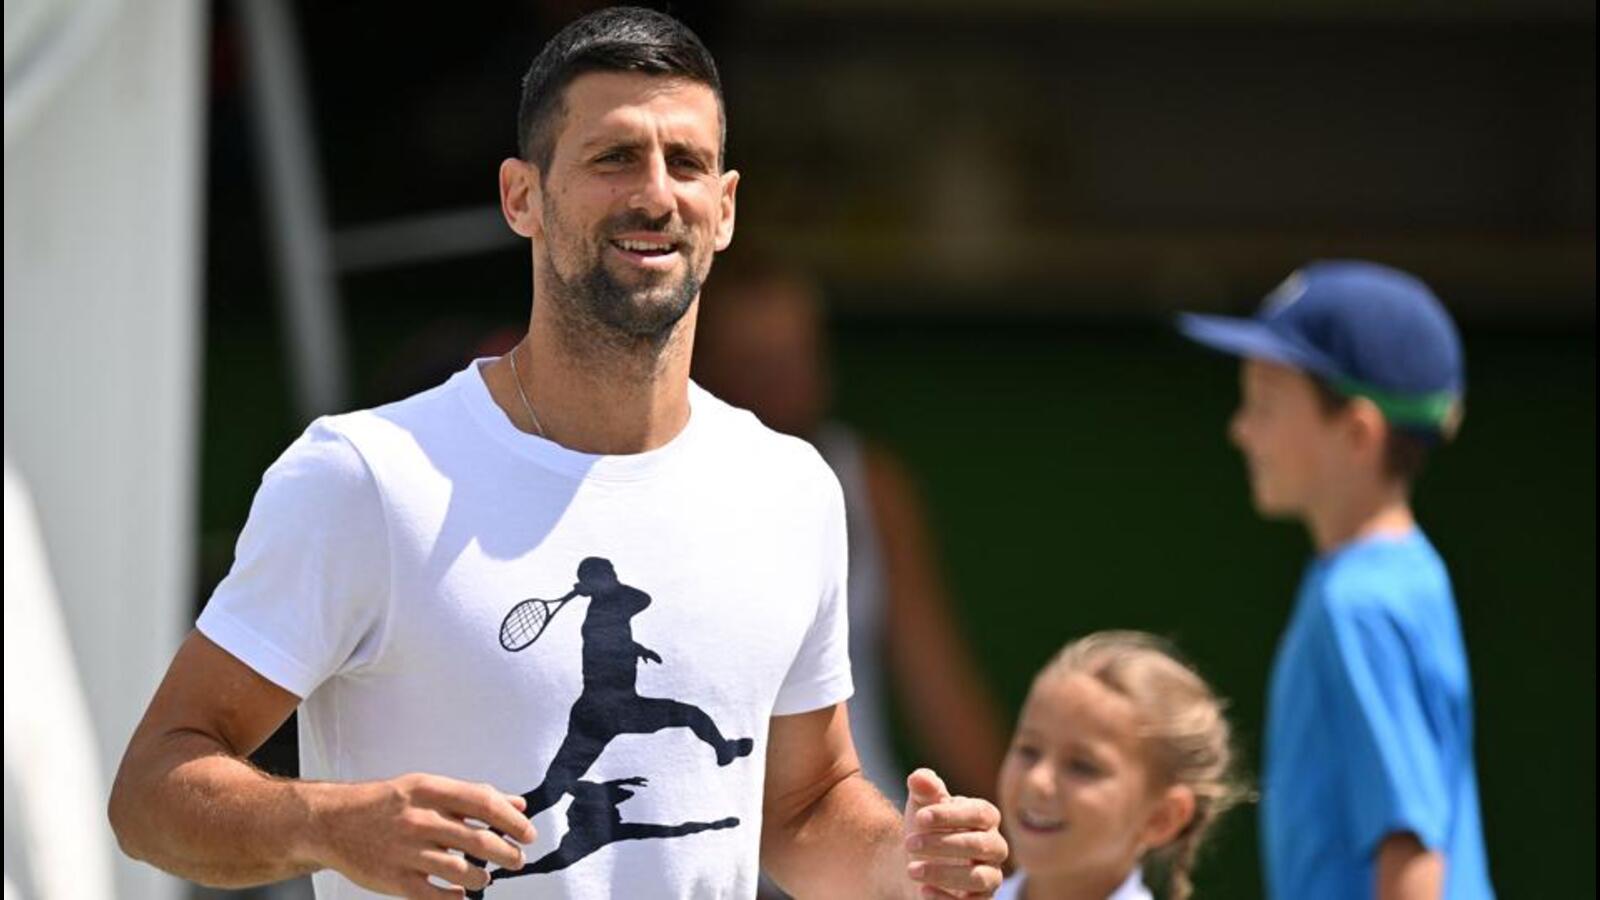 Do not bet against greatness: Amritraj on Djokovic